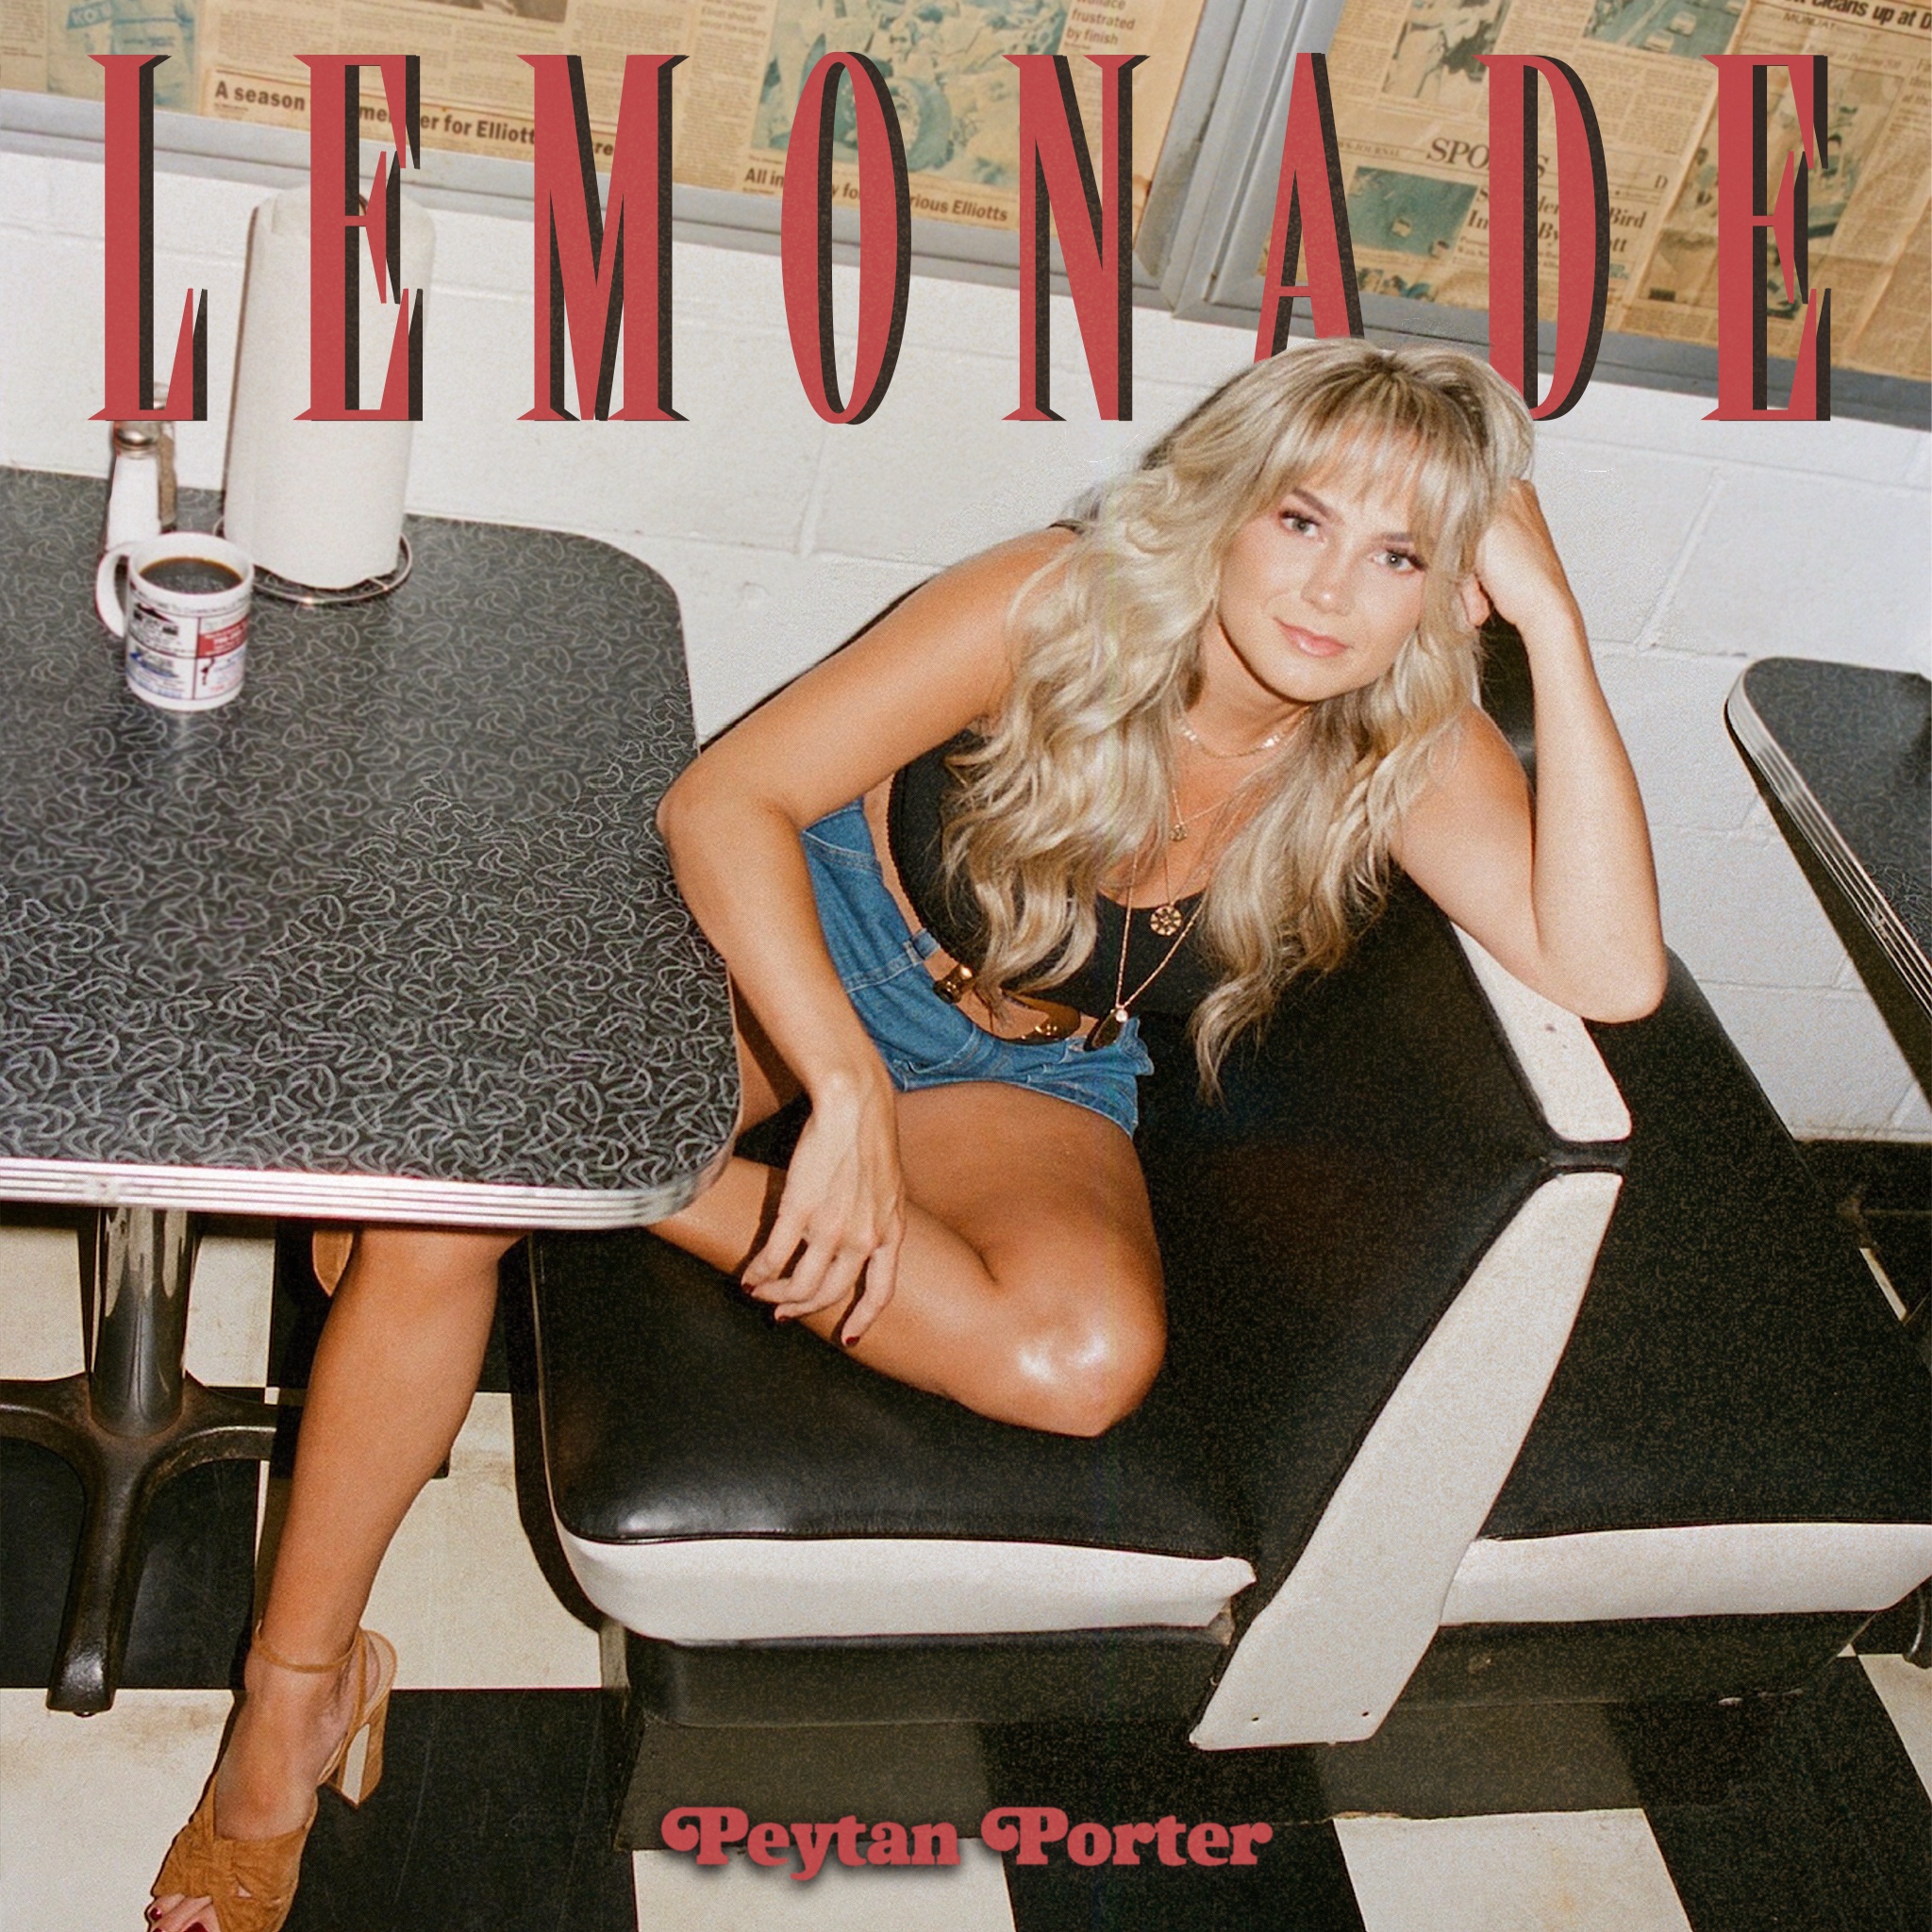 Watch “Lemonade” (The Official Music Video) thumbnail